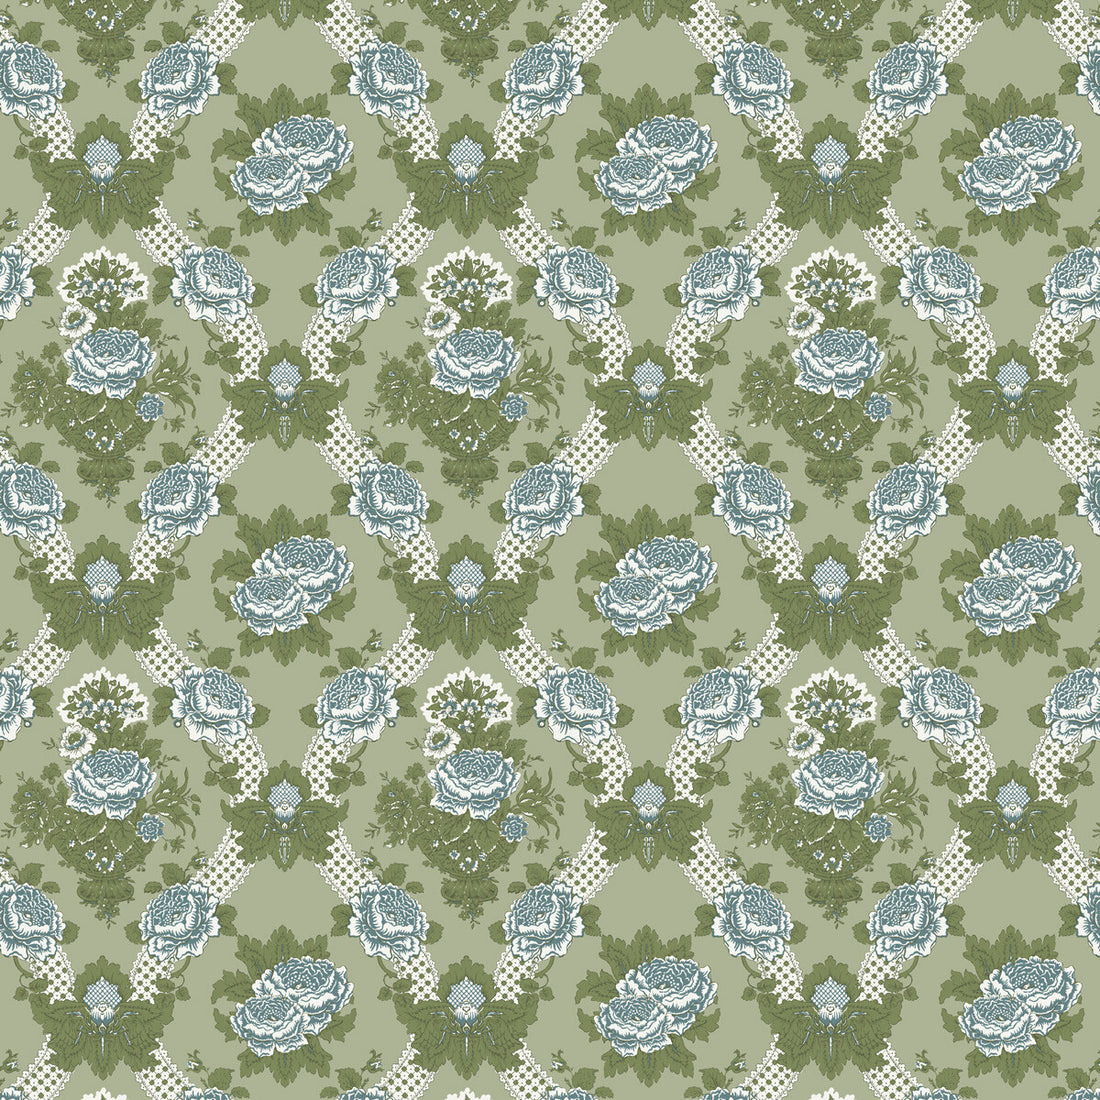 Aranchina fabric in verde color - pattern LCT1058.002.0 - by Gaston y Daniela in the Lorenzo Castillo VI collection